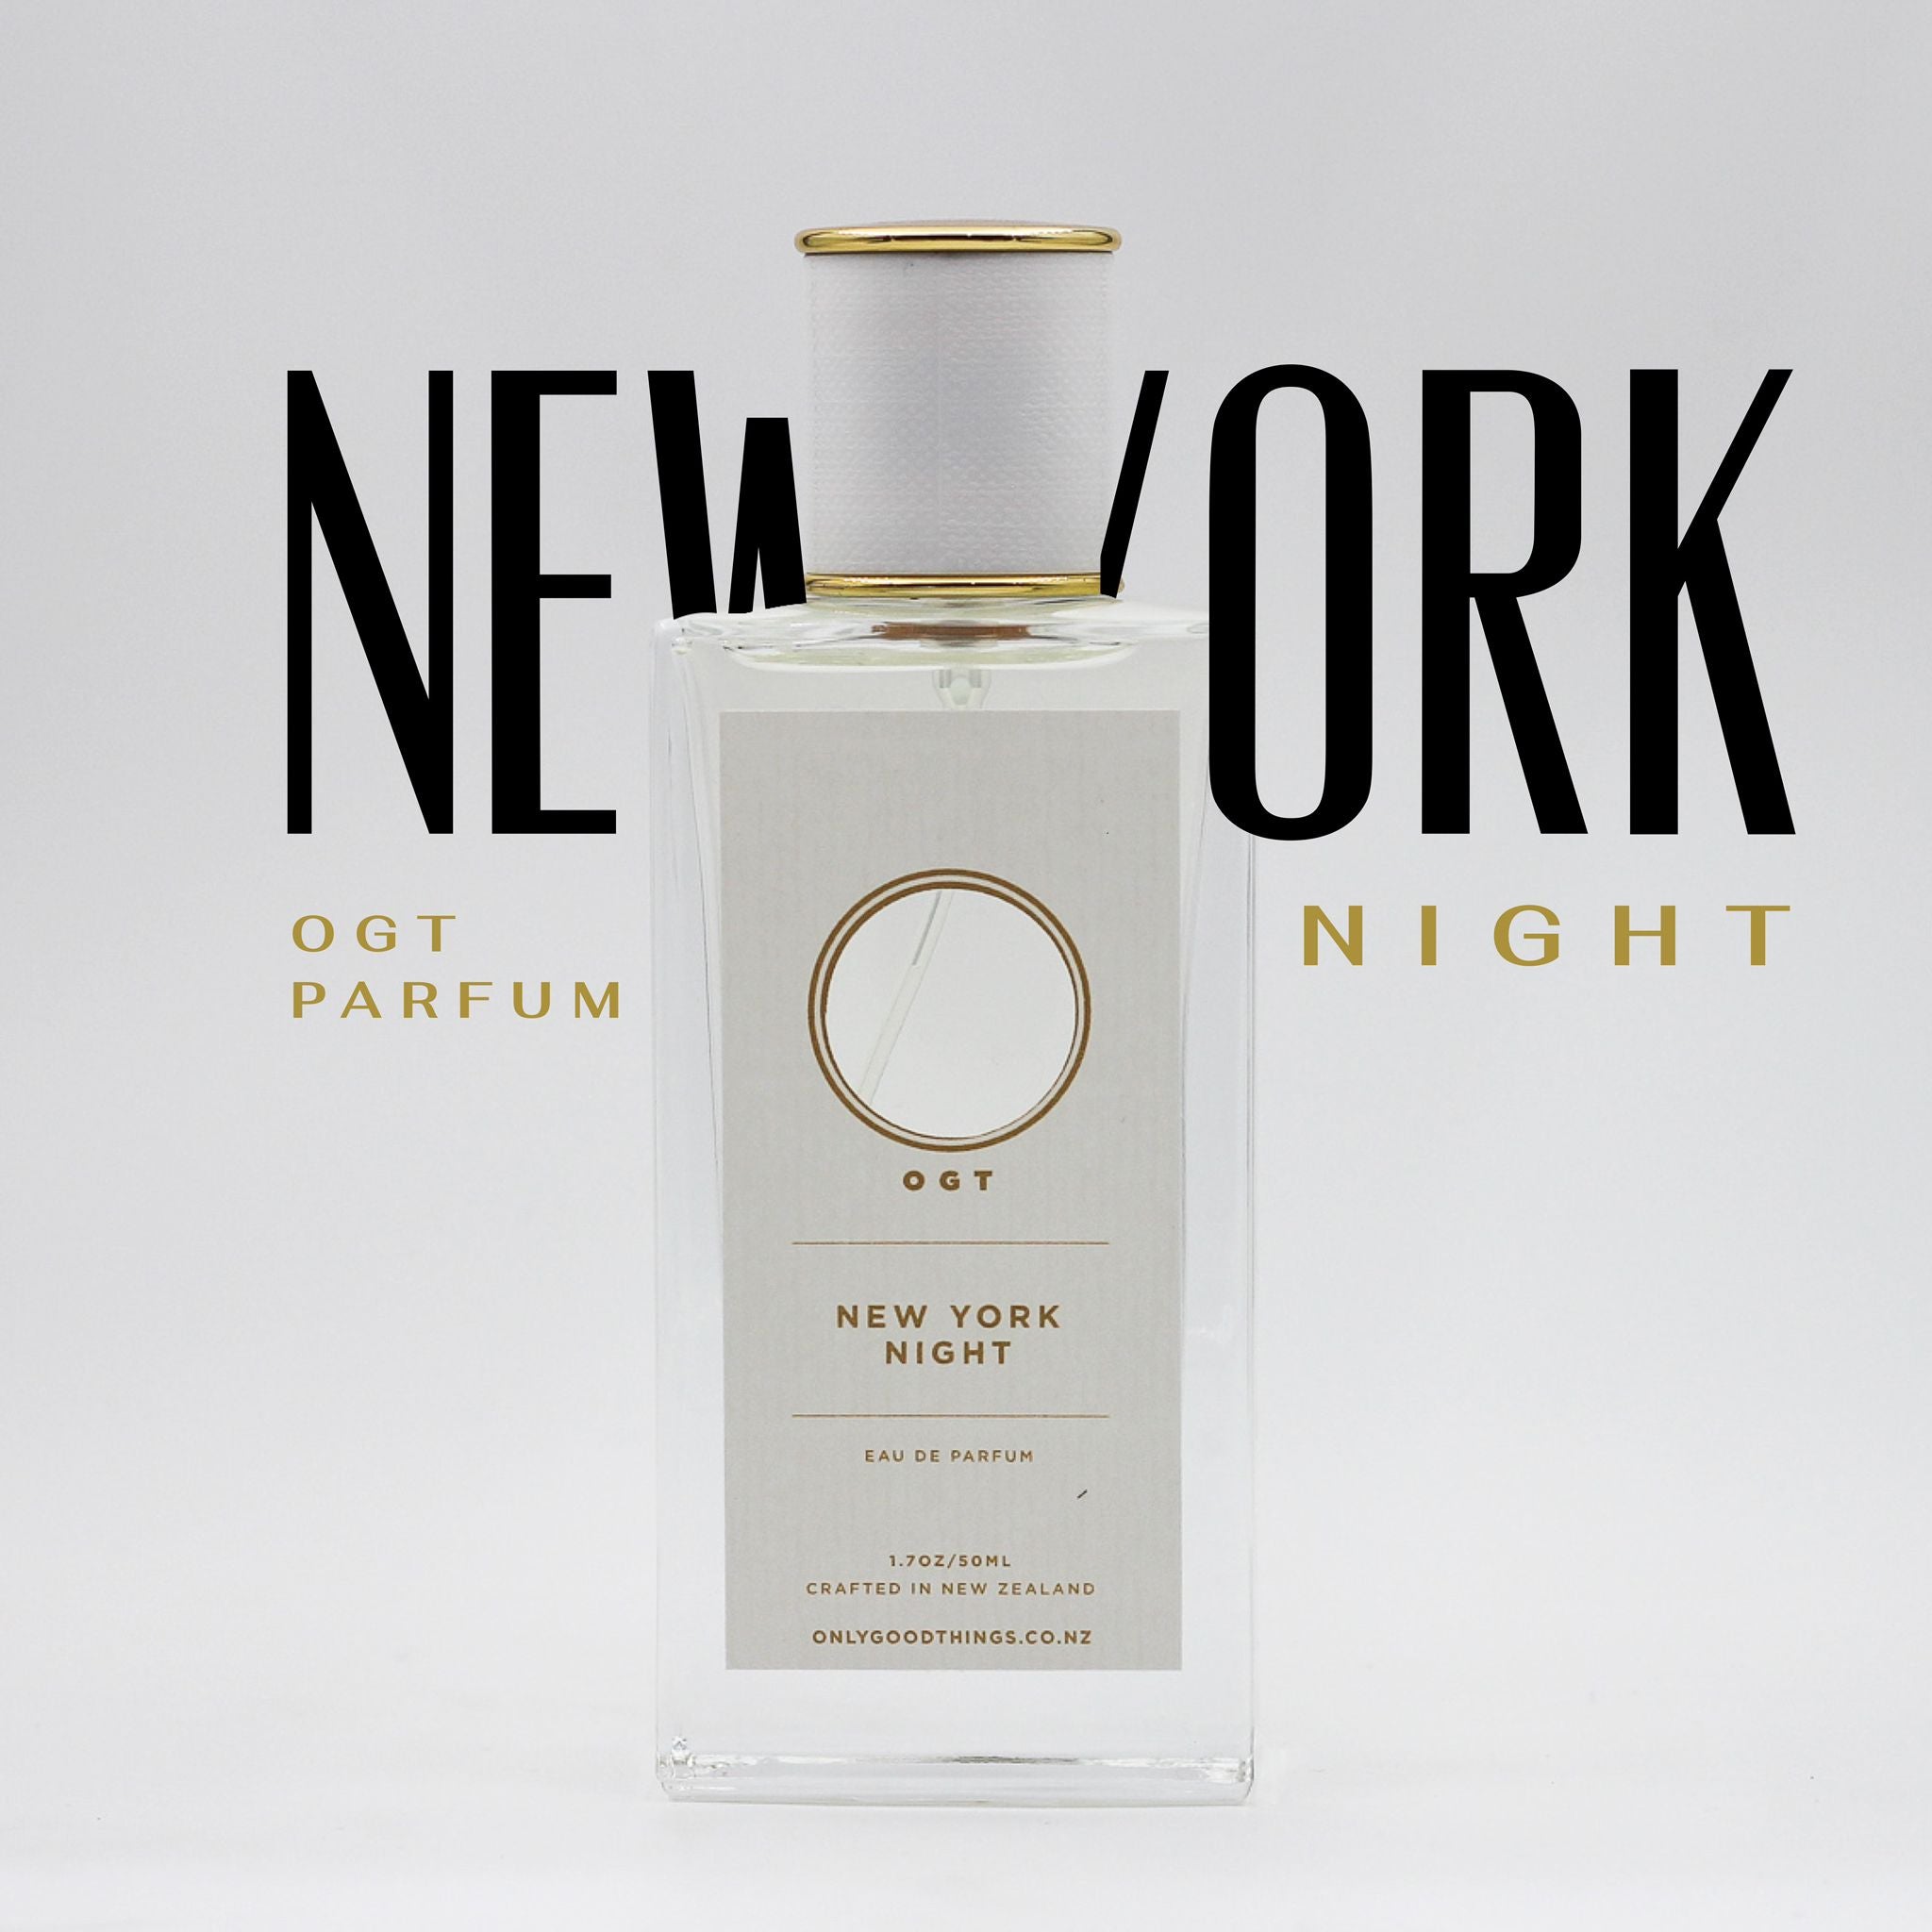 New York Night